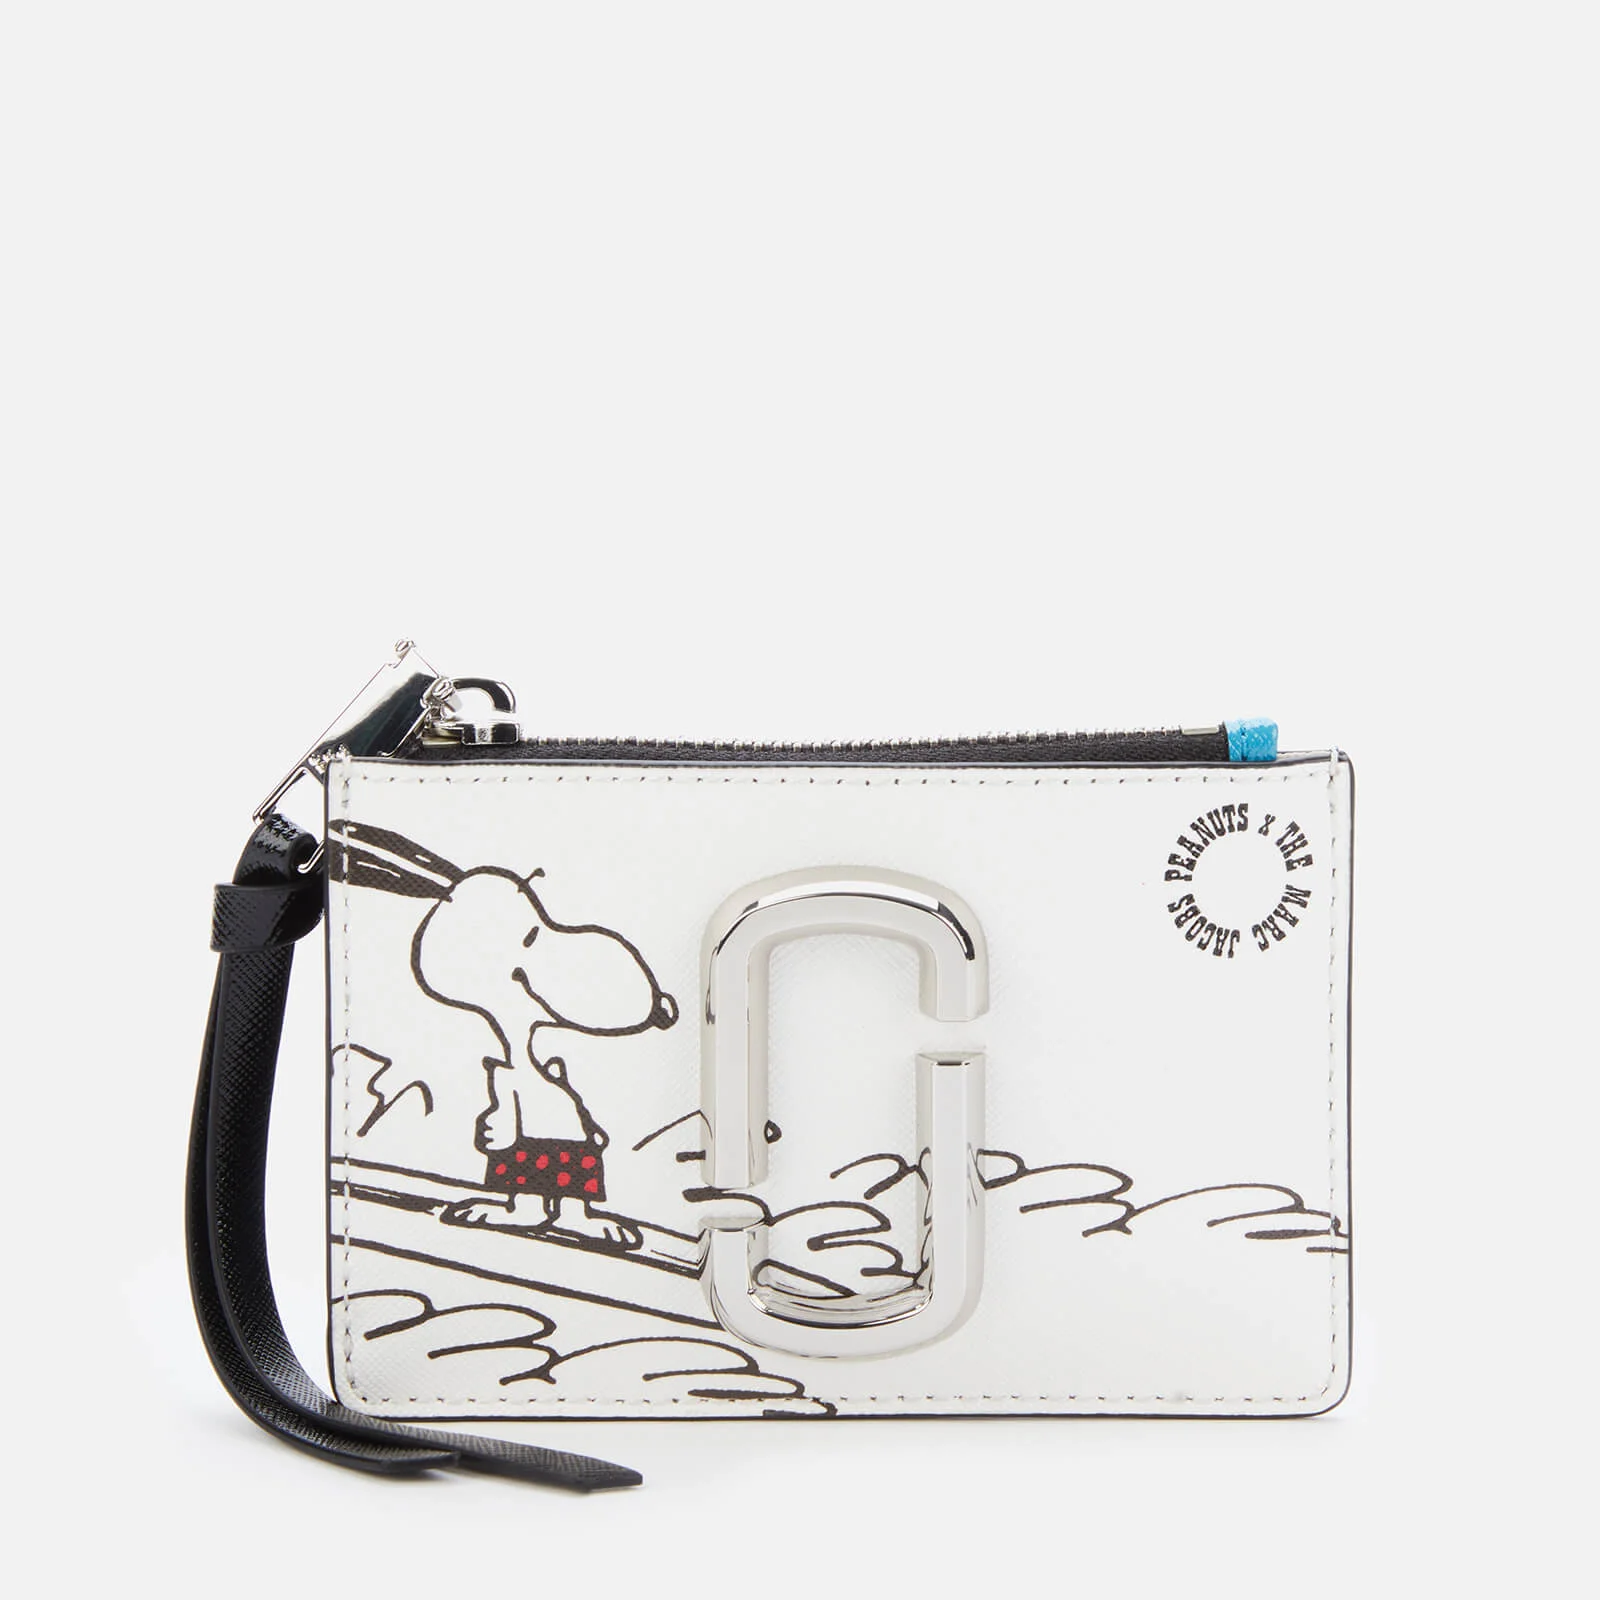 Marc Jacobs Women's Snapshot Peanuts Americana Top Zip Multi Wallet - White Multi Image 1